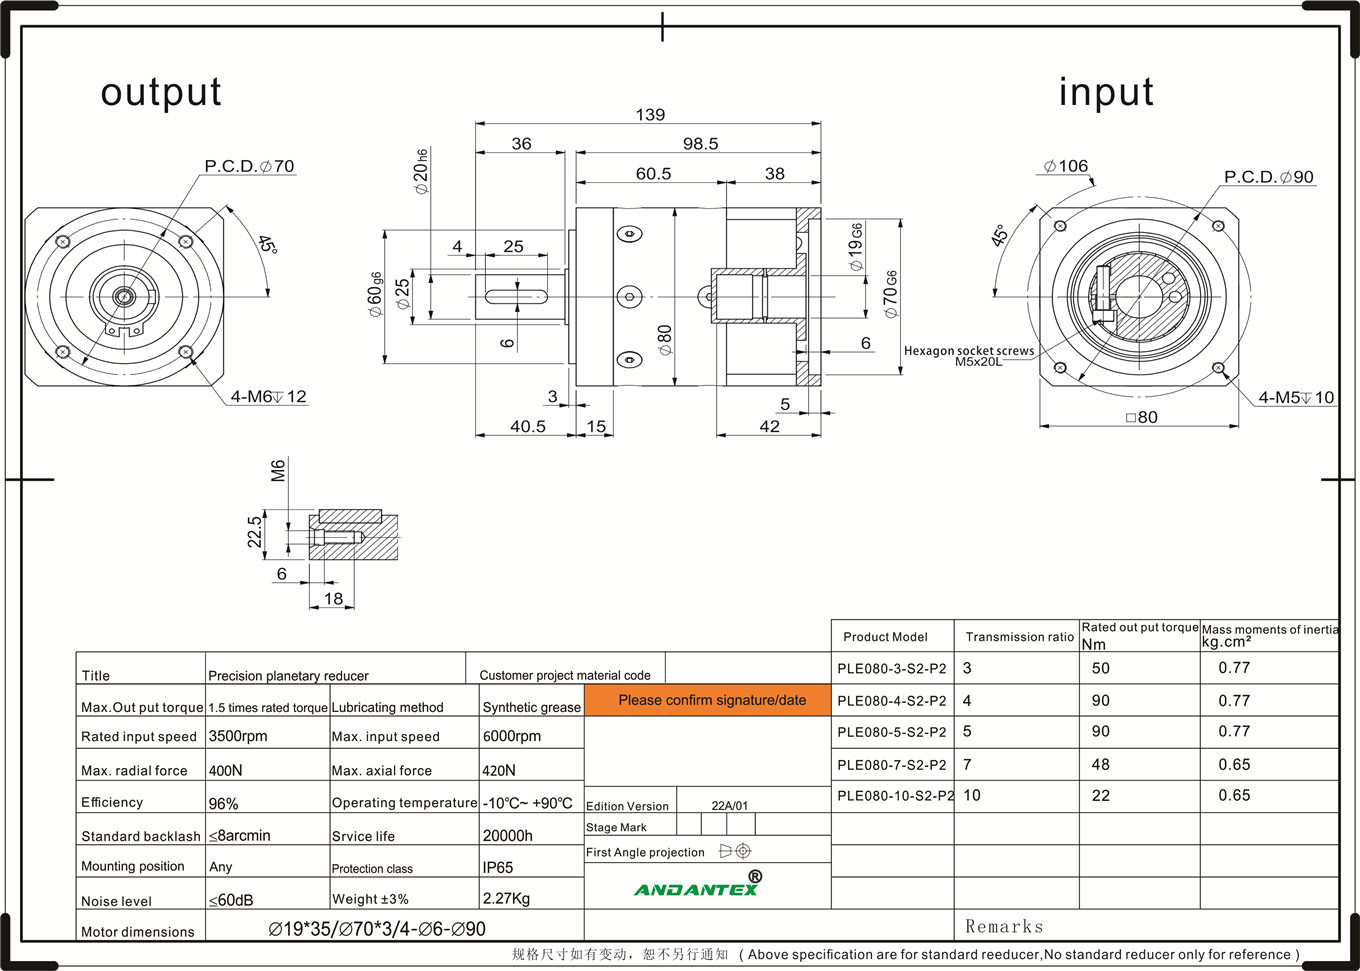 Andantex ple080-7-s2-p2 standard series reducer in food processing equipment-01